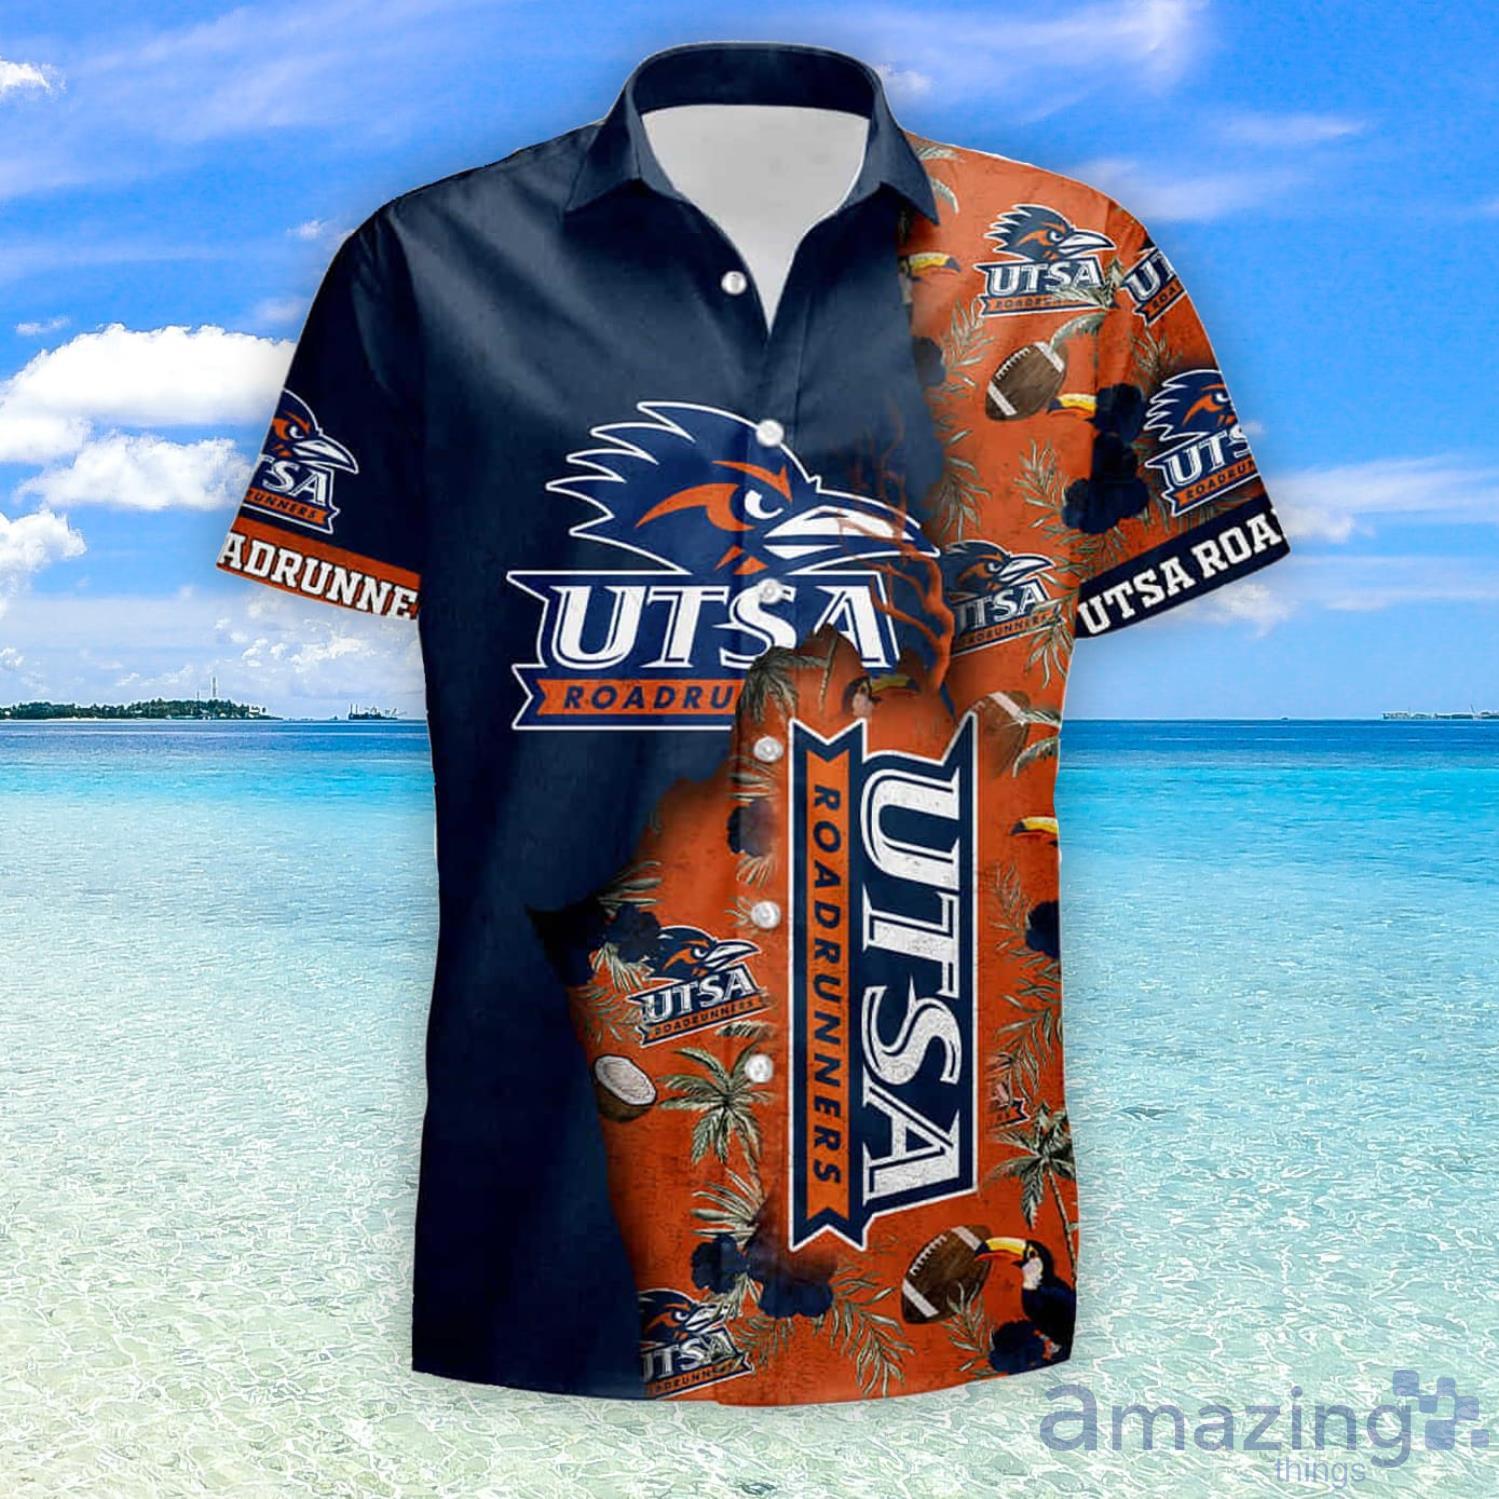 Fashion Team Wear Utsa Customize Football Jersey Shirts